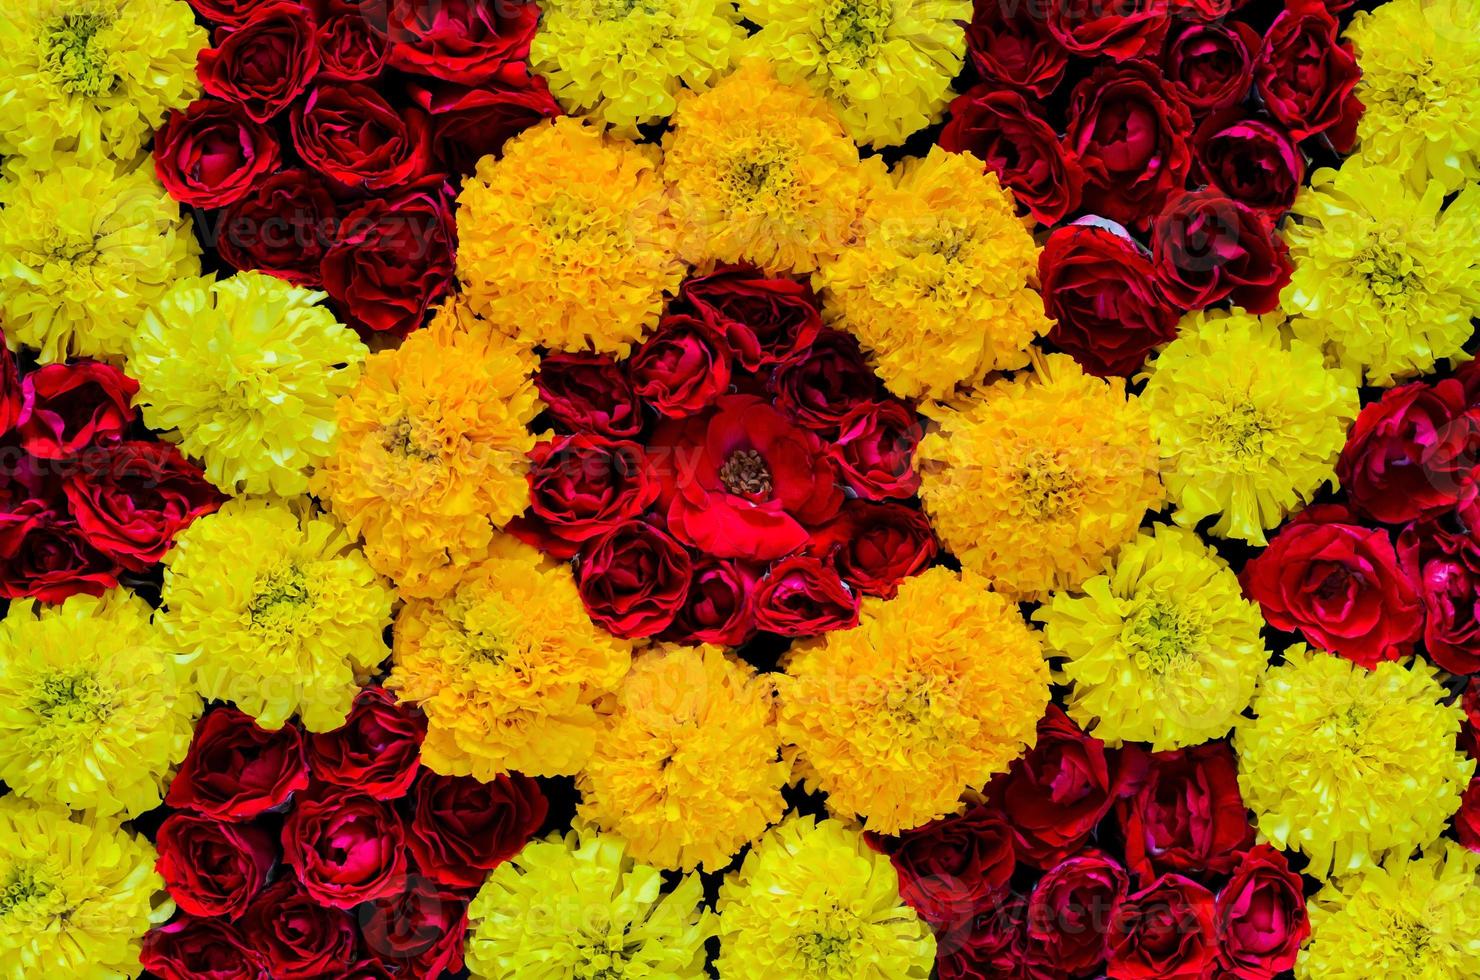 Decorative rose and marigold flowers rangoli for Diwali festival background. photo